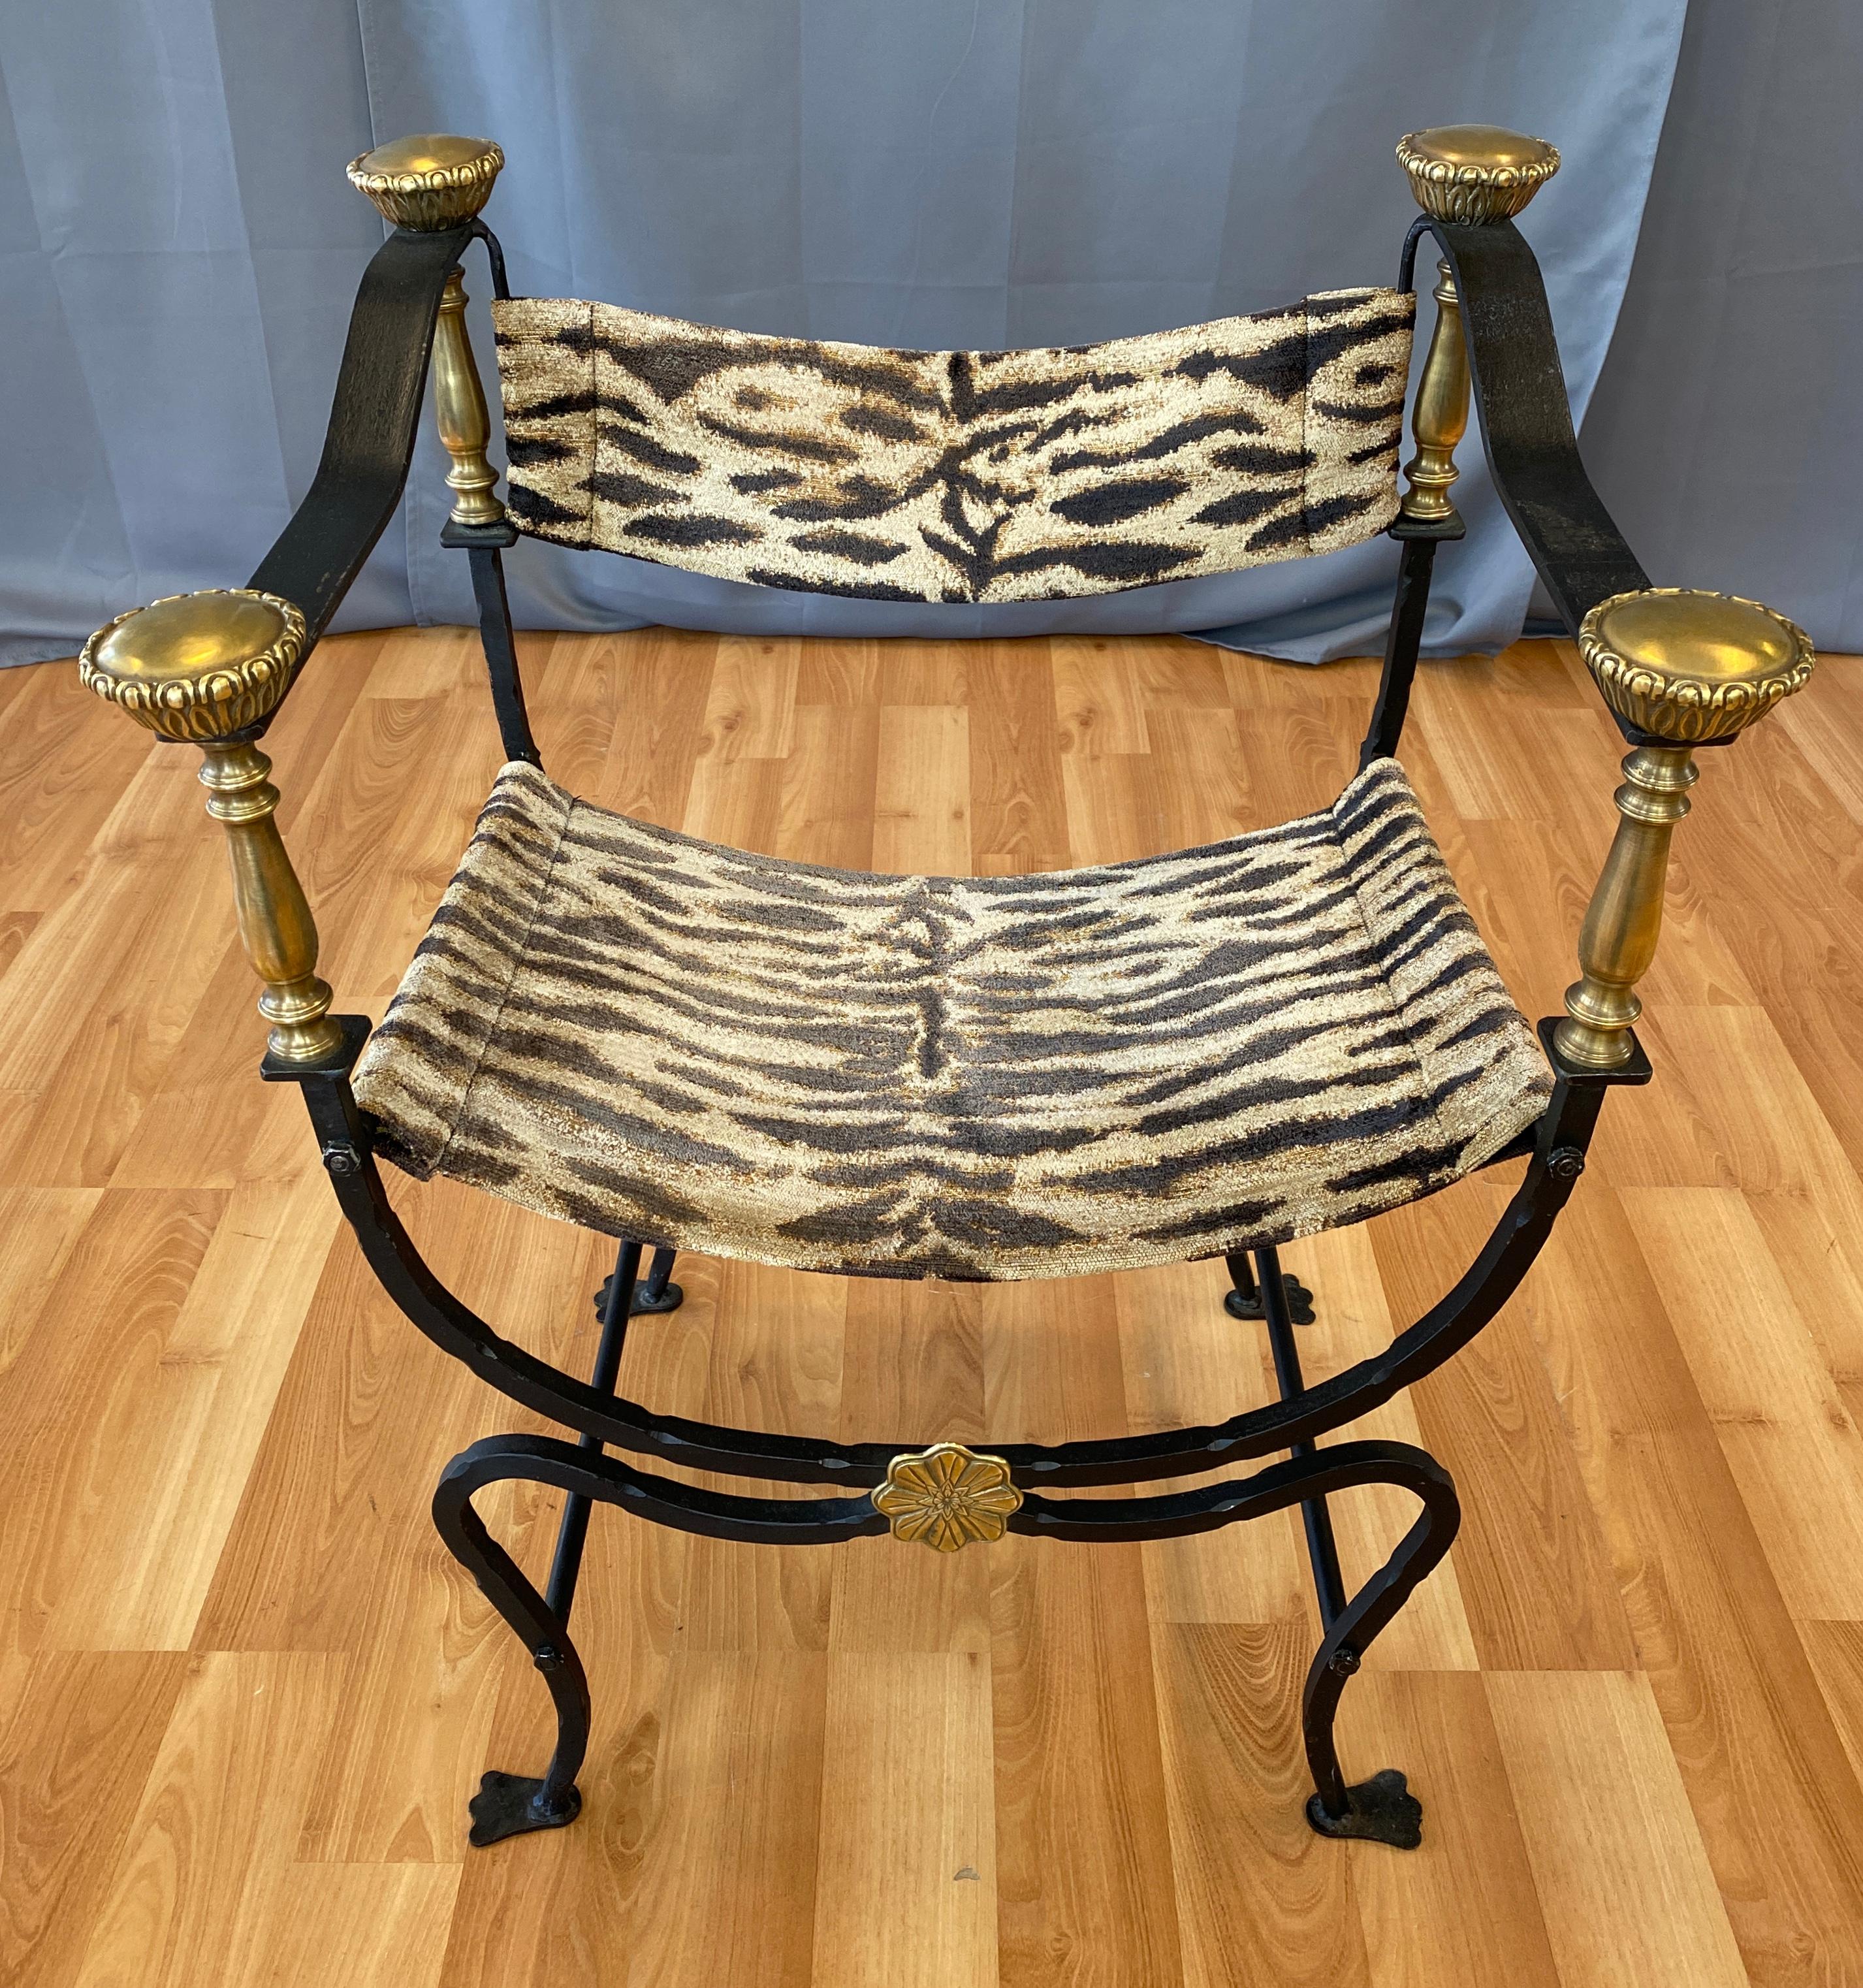 Mid-20th Century Italian Iron and Brass Savonarola Style Chair, circa 1950s-1960s